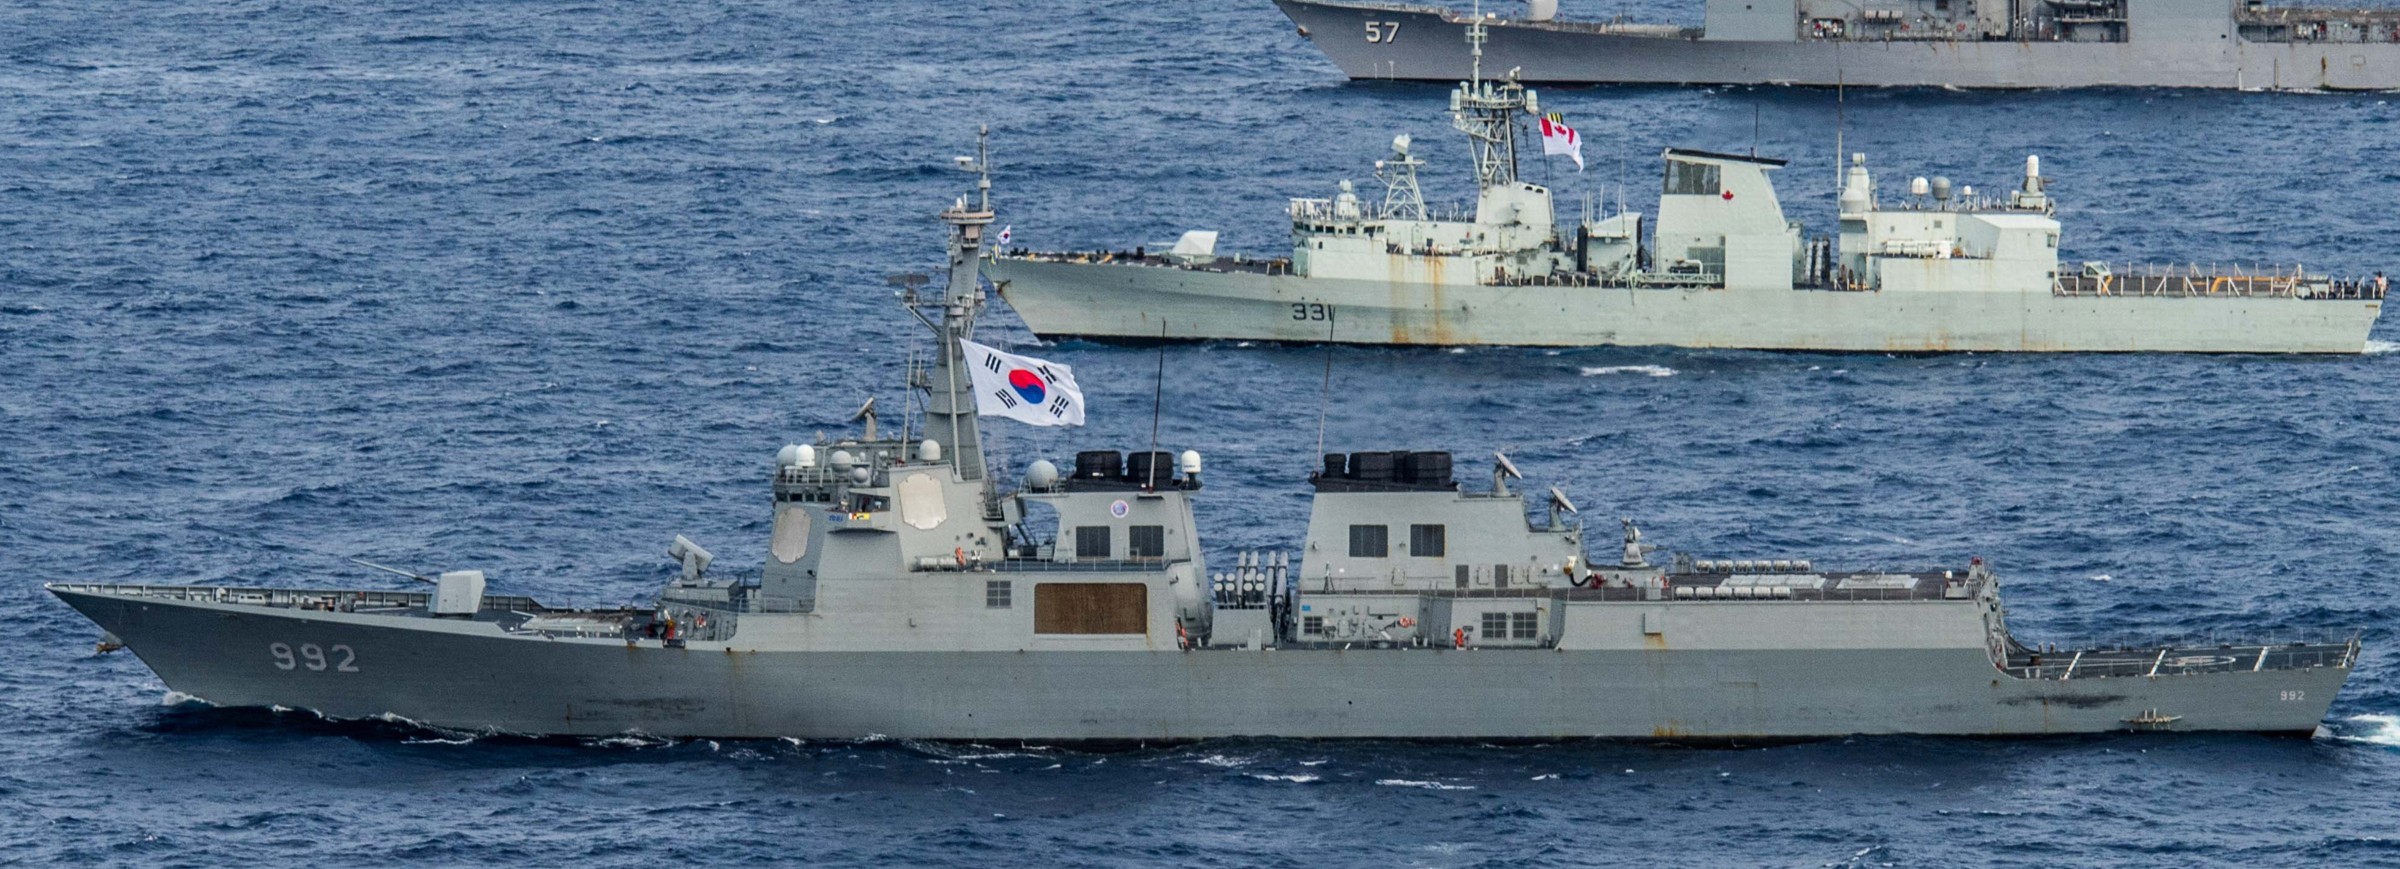 ddg-992 roks yulgok yi i sejong the great class guided missile destroyer aegis republic of korean navy rokn 04